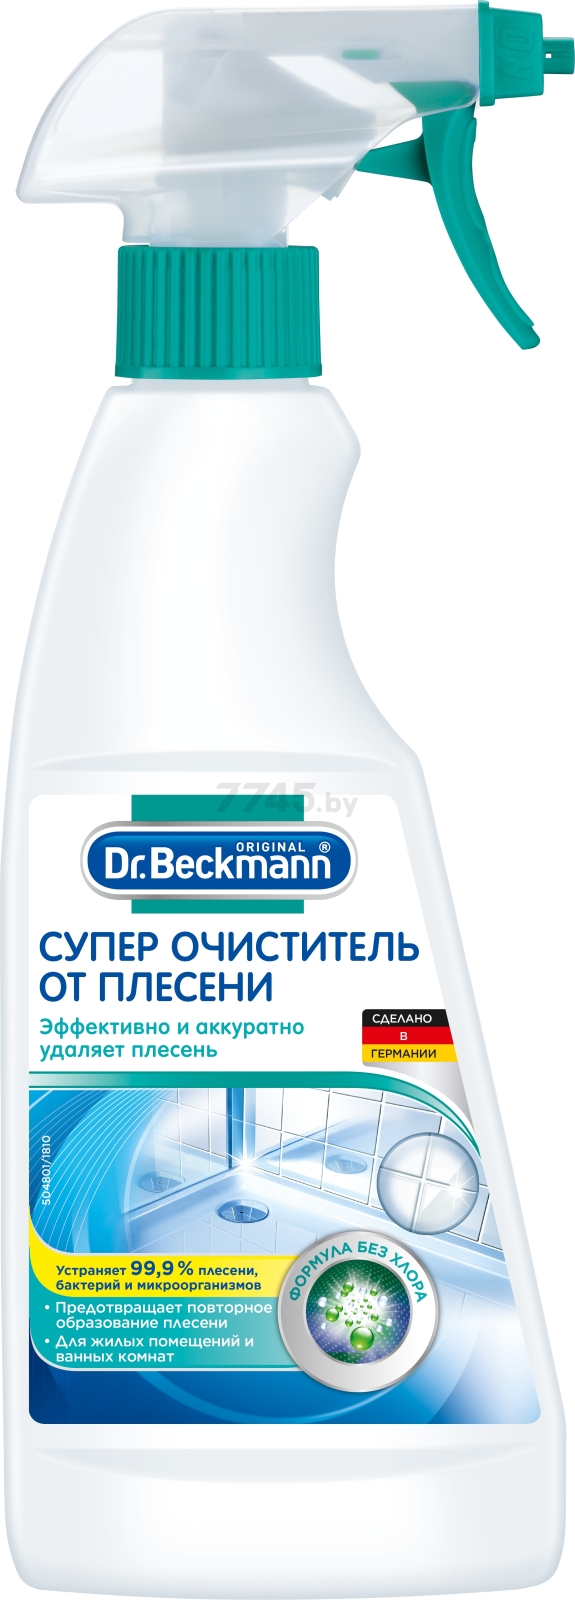 Средство для уничтожения плесени DR.BECKMANN 0,5 л (41281)